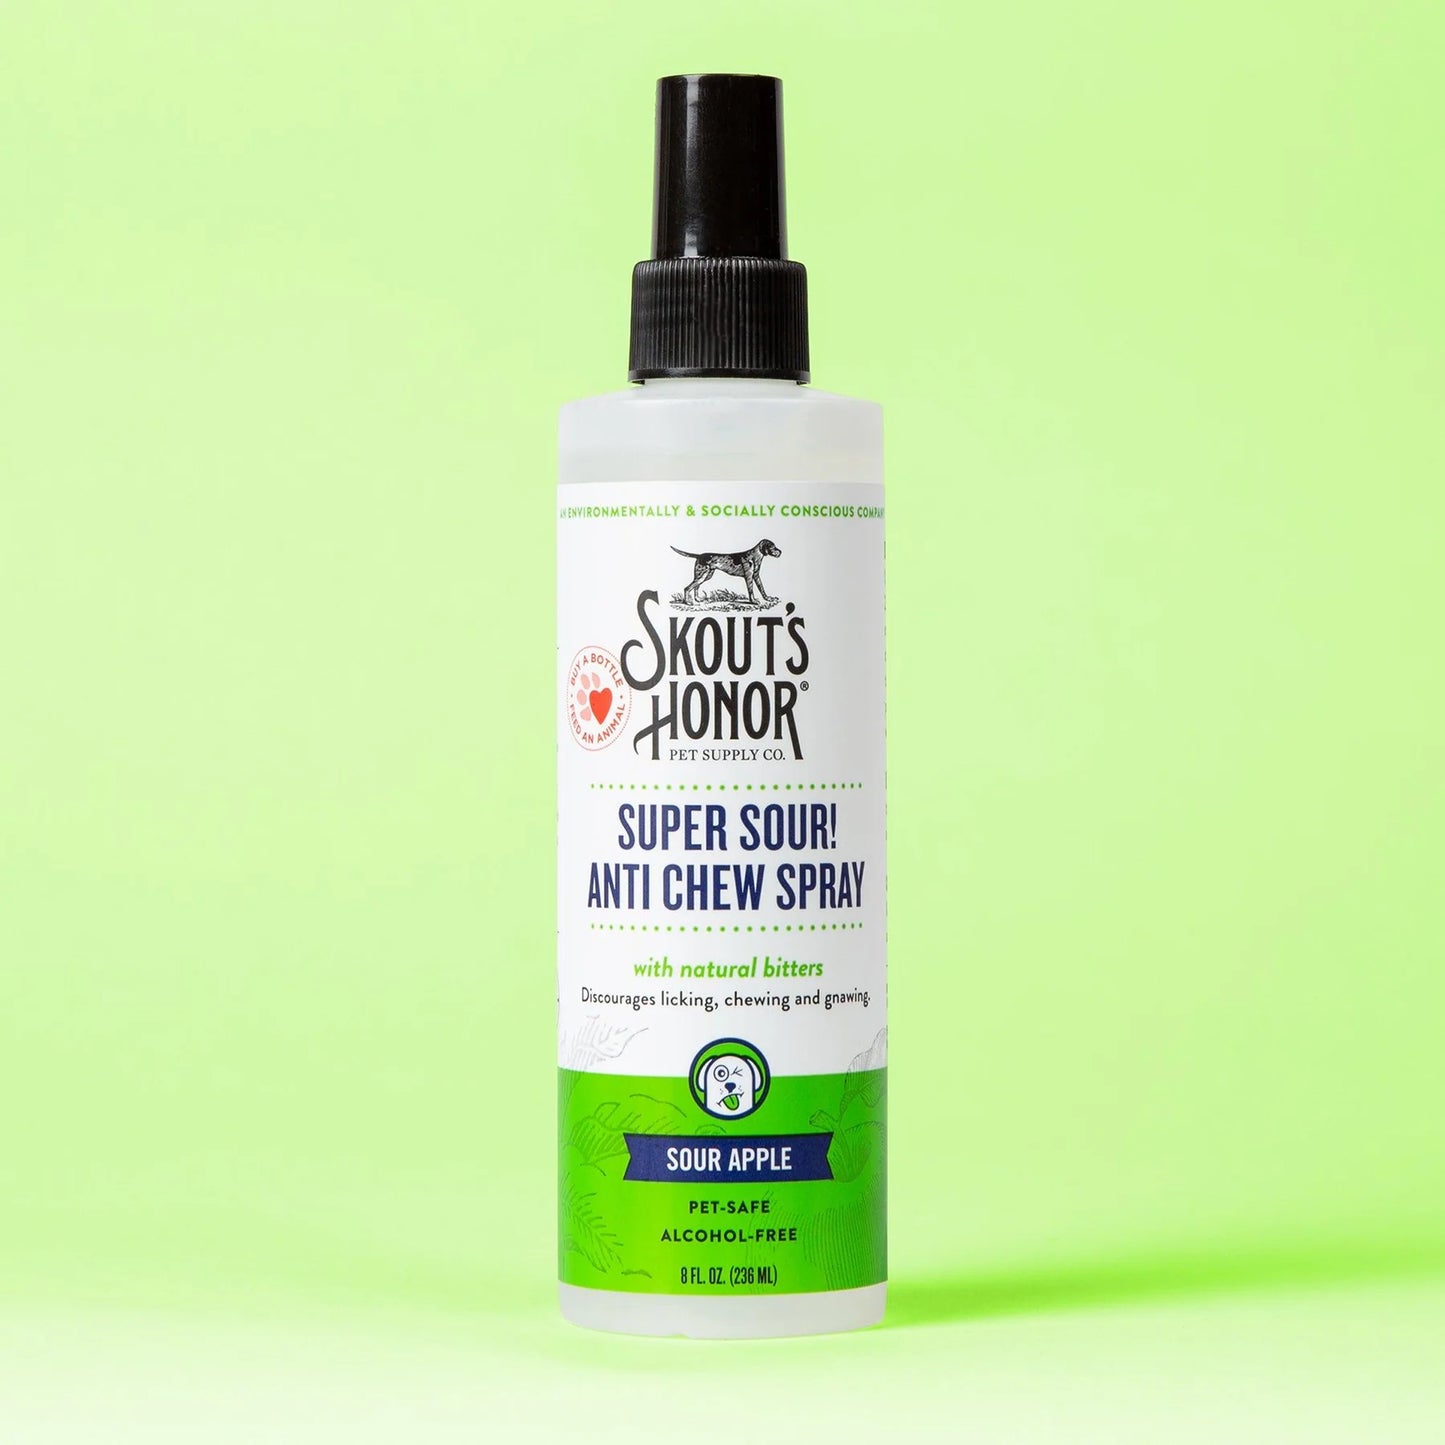 Skout's Honor Super Sour! Anti-Chew 8-oz Spray For Pets